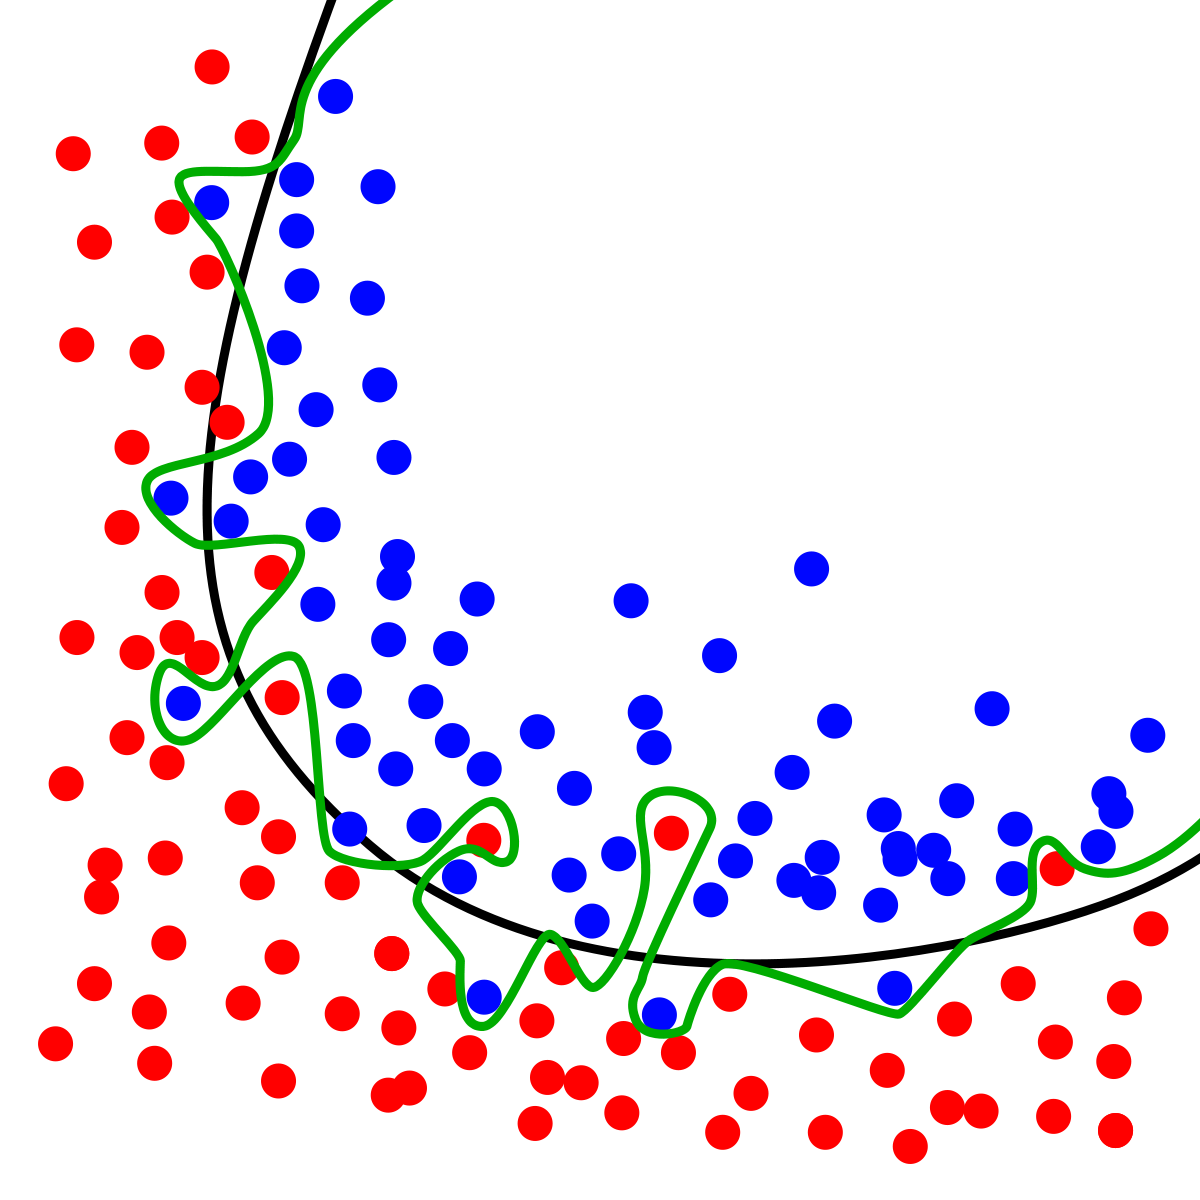 Learning curve - Wikipedia